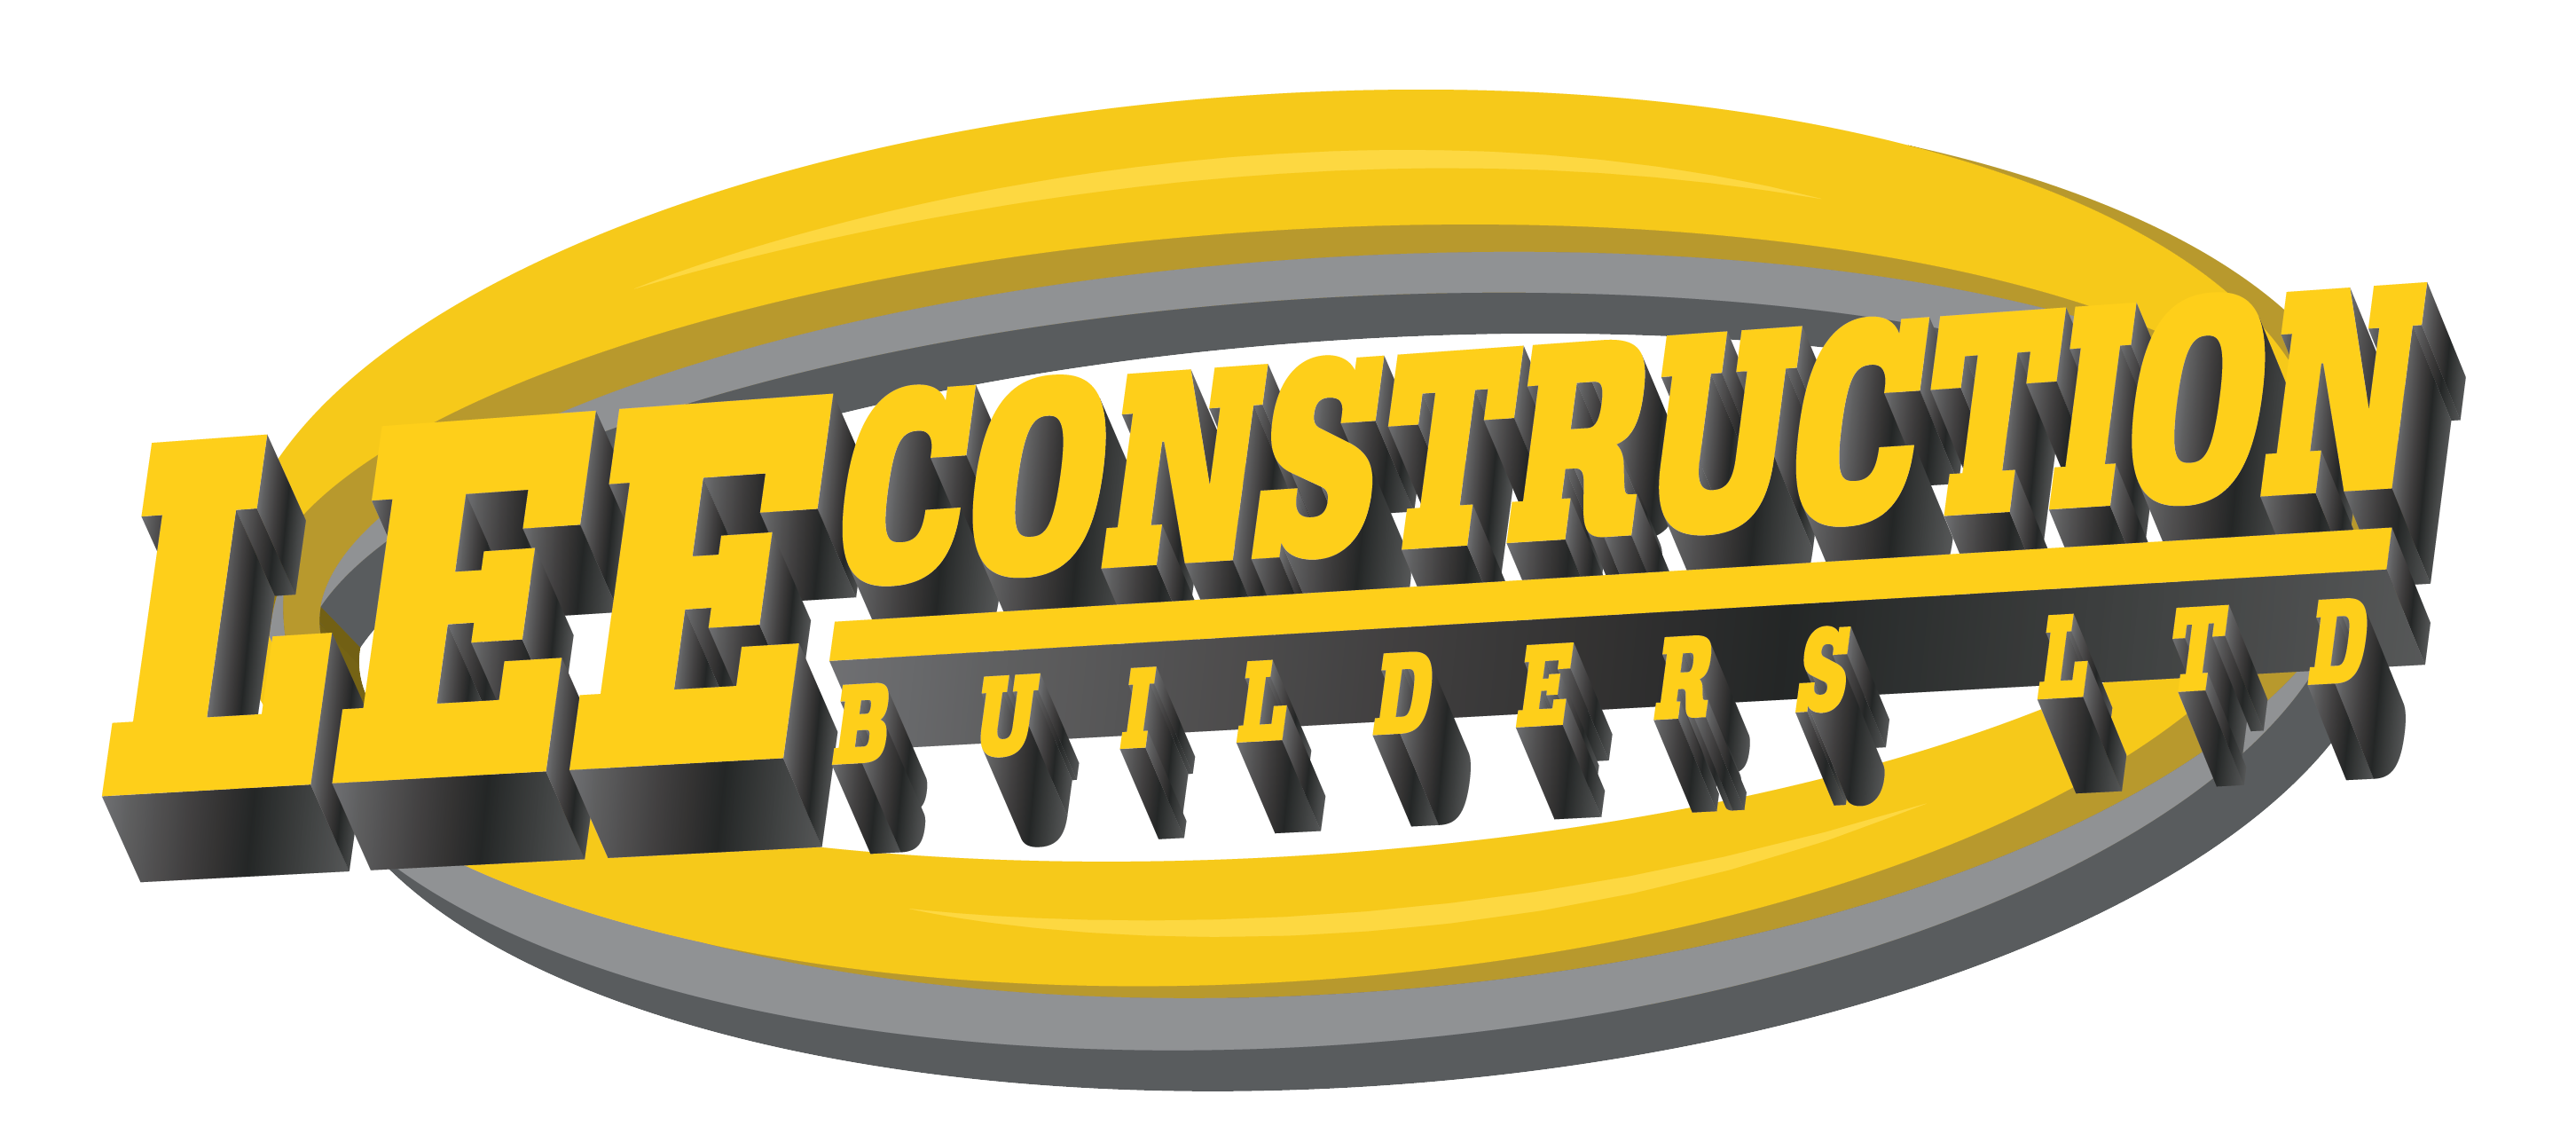 Lee Construction Builders LTD